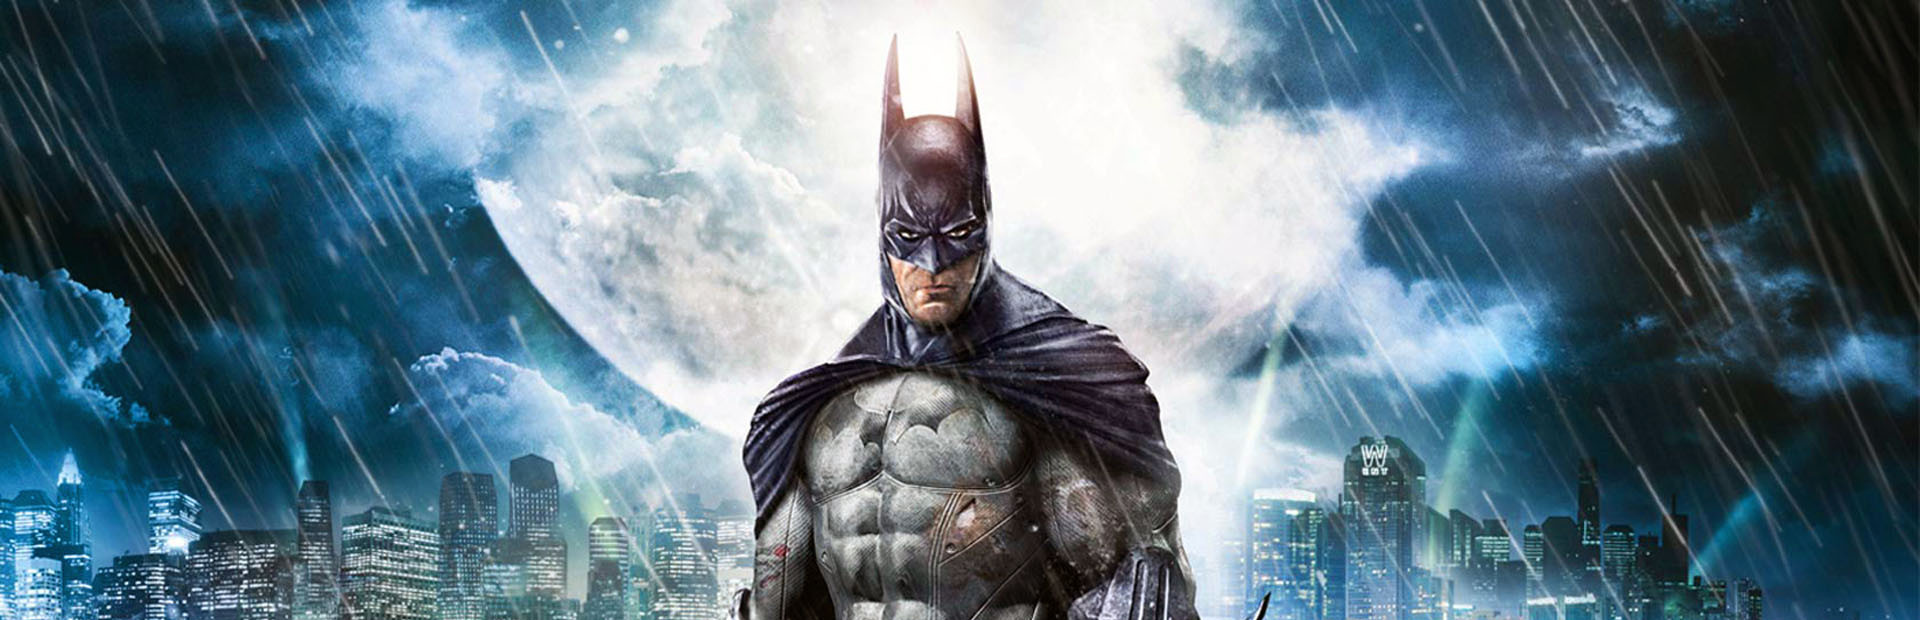 Batman: Arkham Asylum Game of the Year Edition cover image